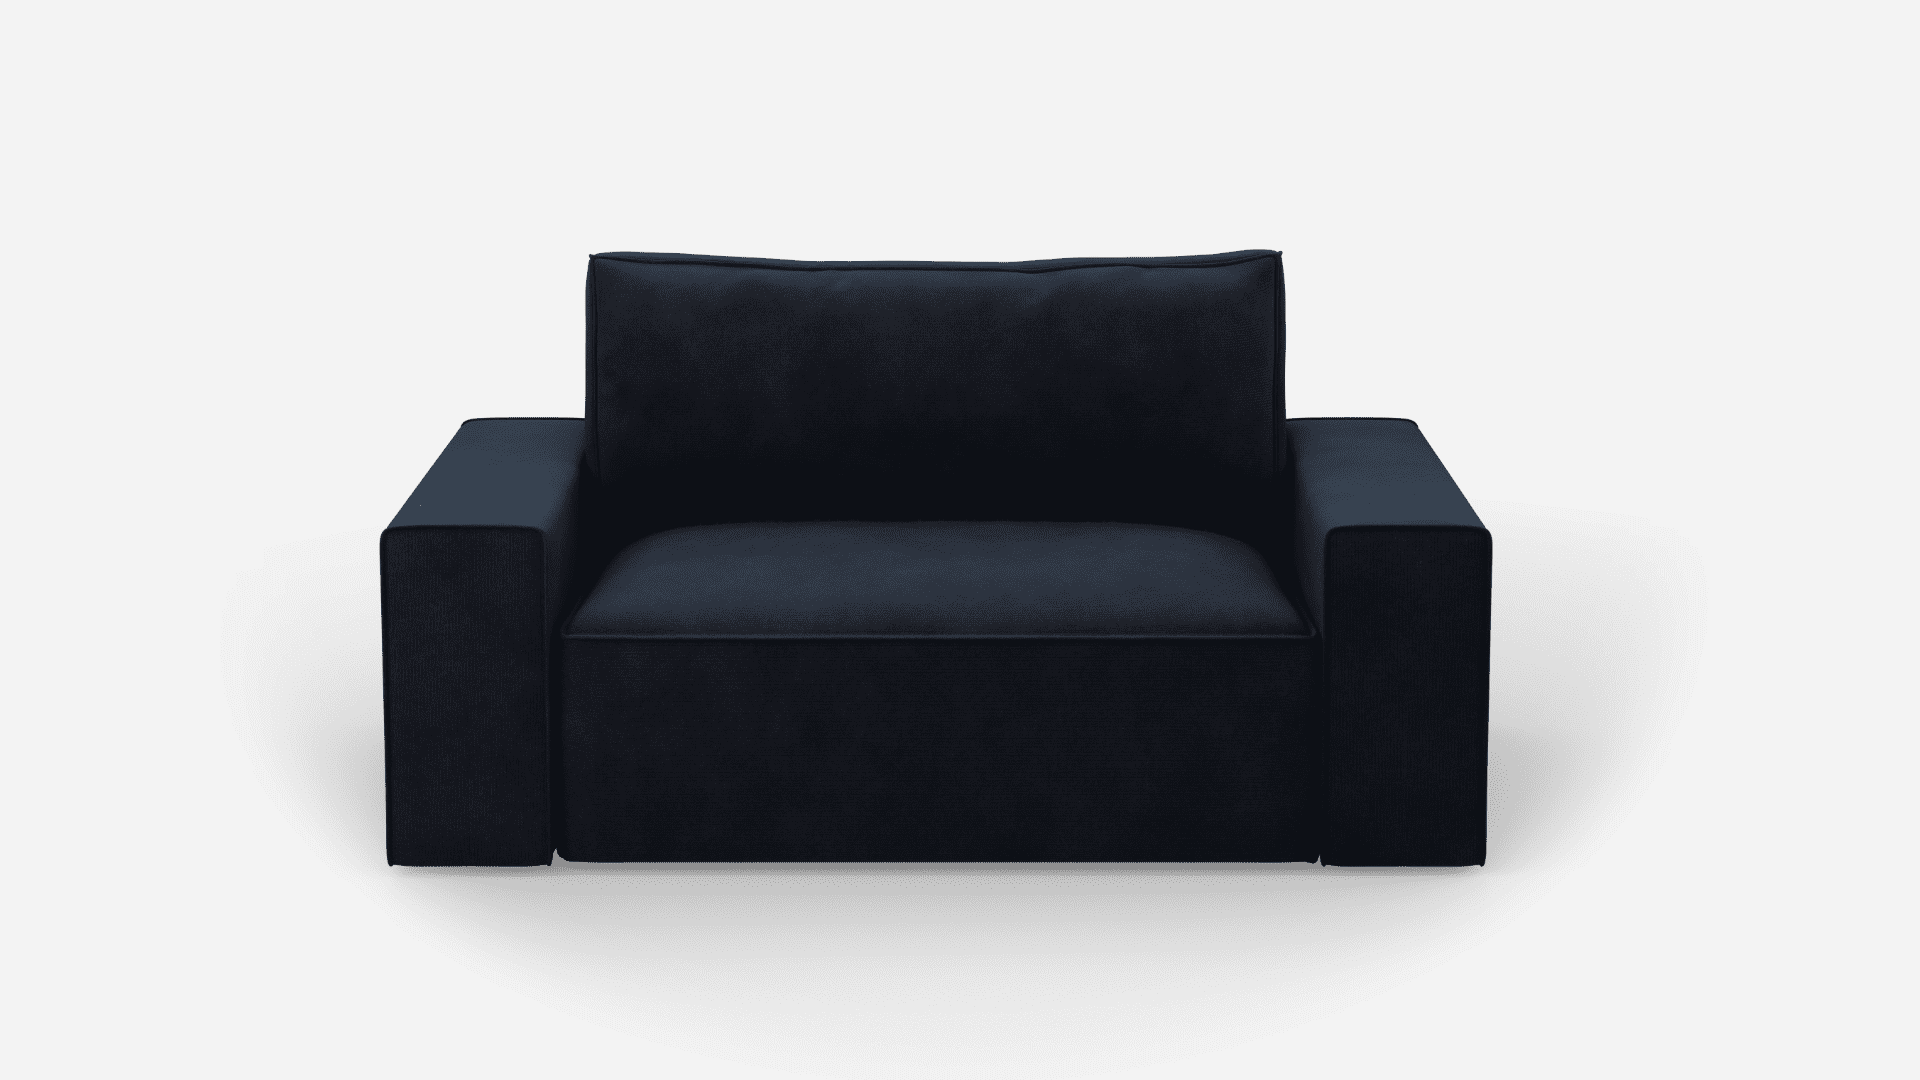 Sofa 2-osobowa Benet BlockDL Welur II - myBenet